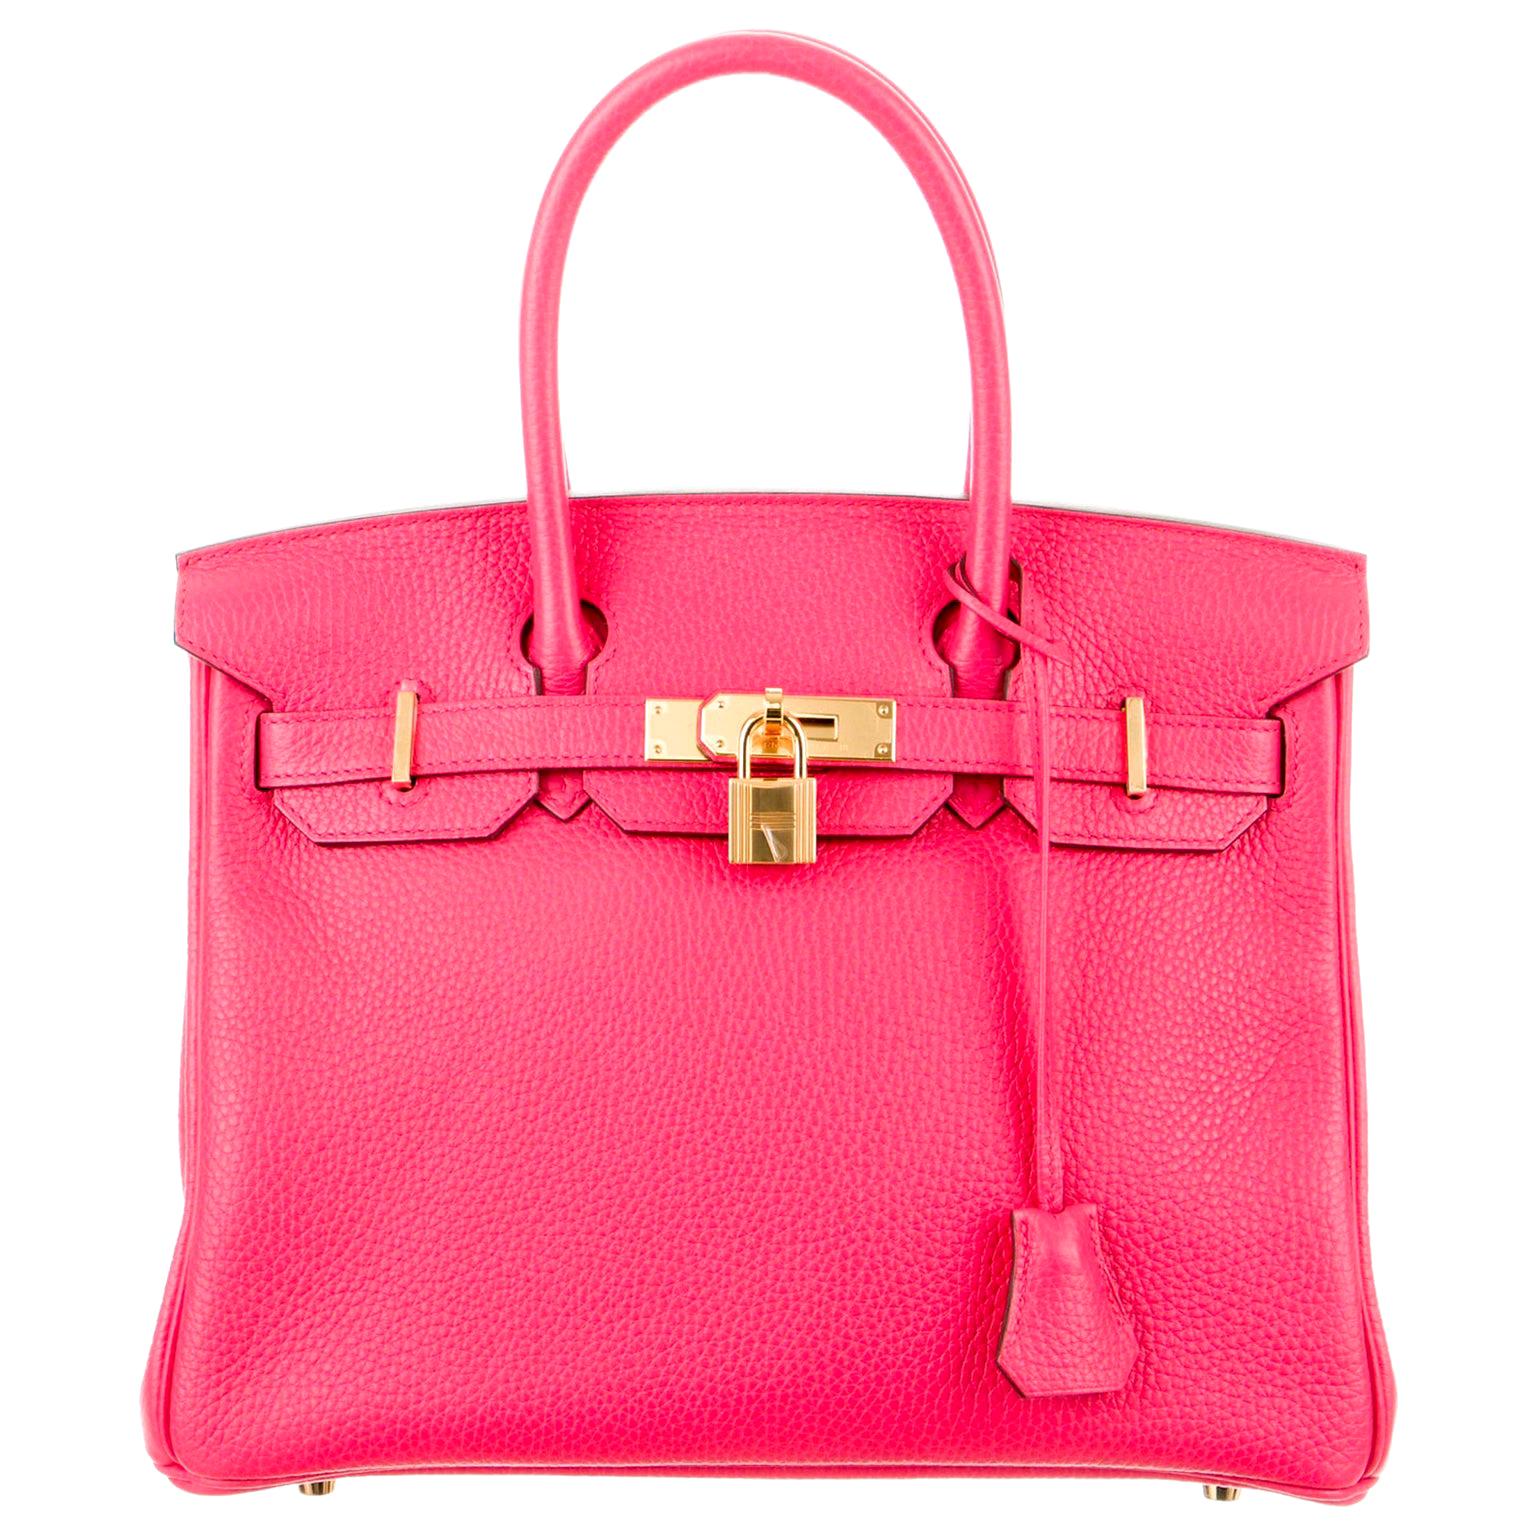 Hermes NEW Birkin 30 Pink Leather Gold Top Handle Satchel Tote Bag 